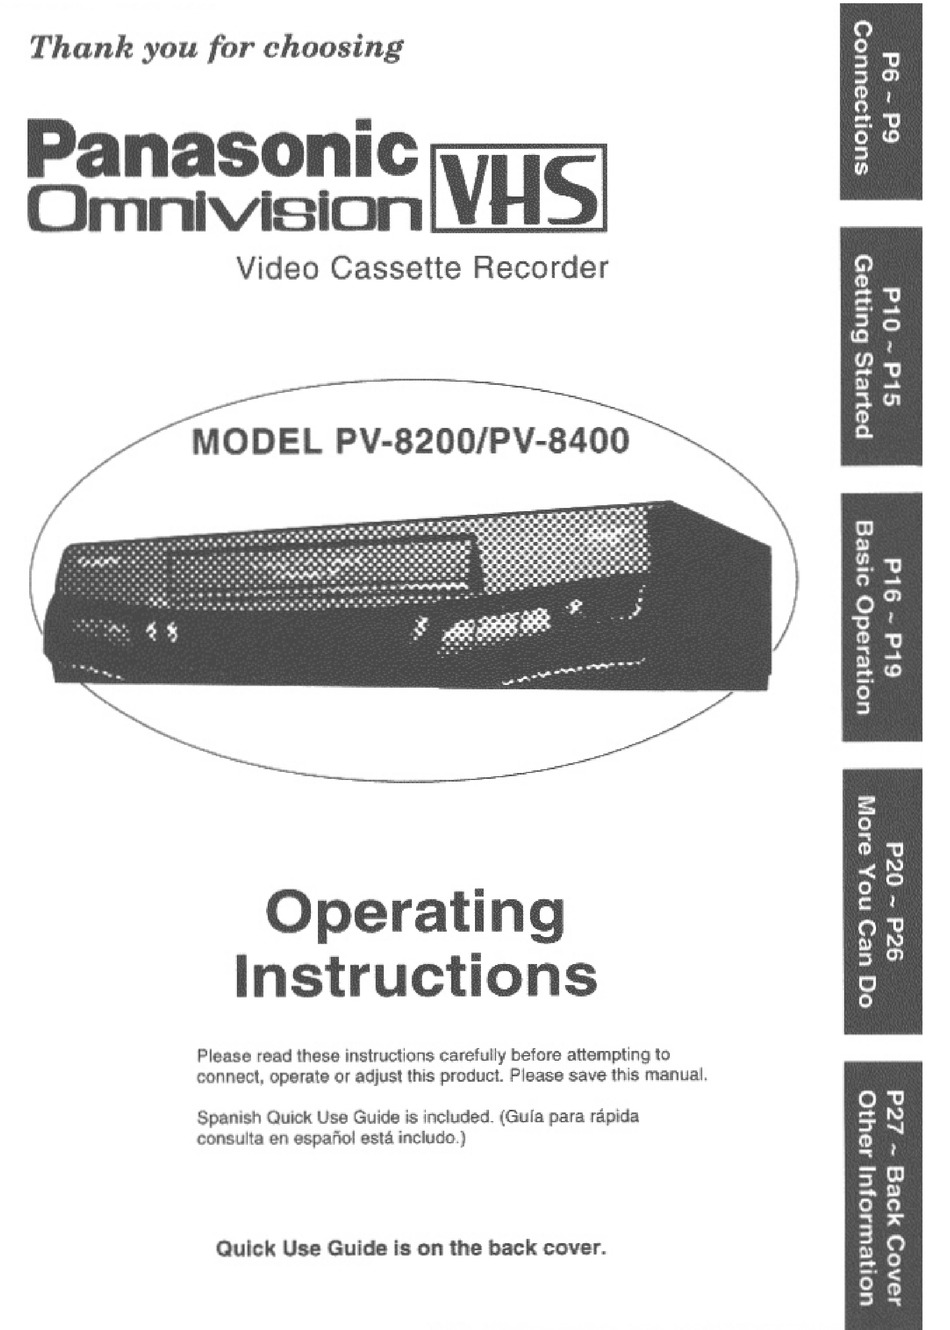 Panasonic PV-8400 Video Cassette Recorder 